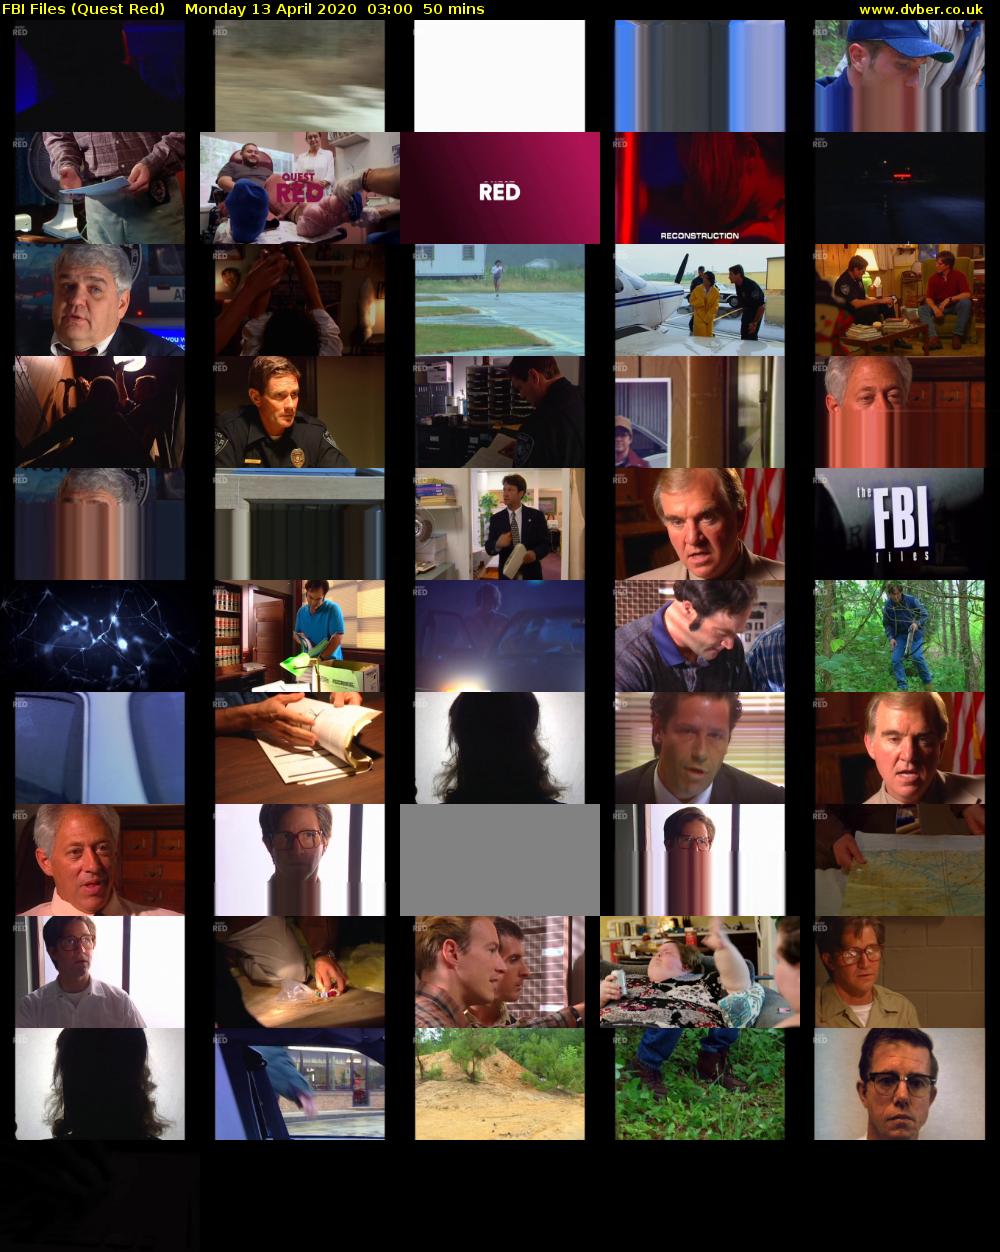 FBI Files (Quest Red) Monday 13 April 2020 03:00 - 03:50